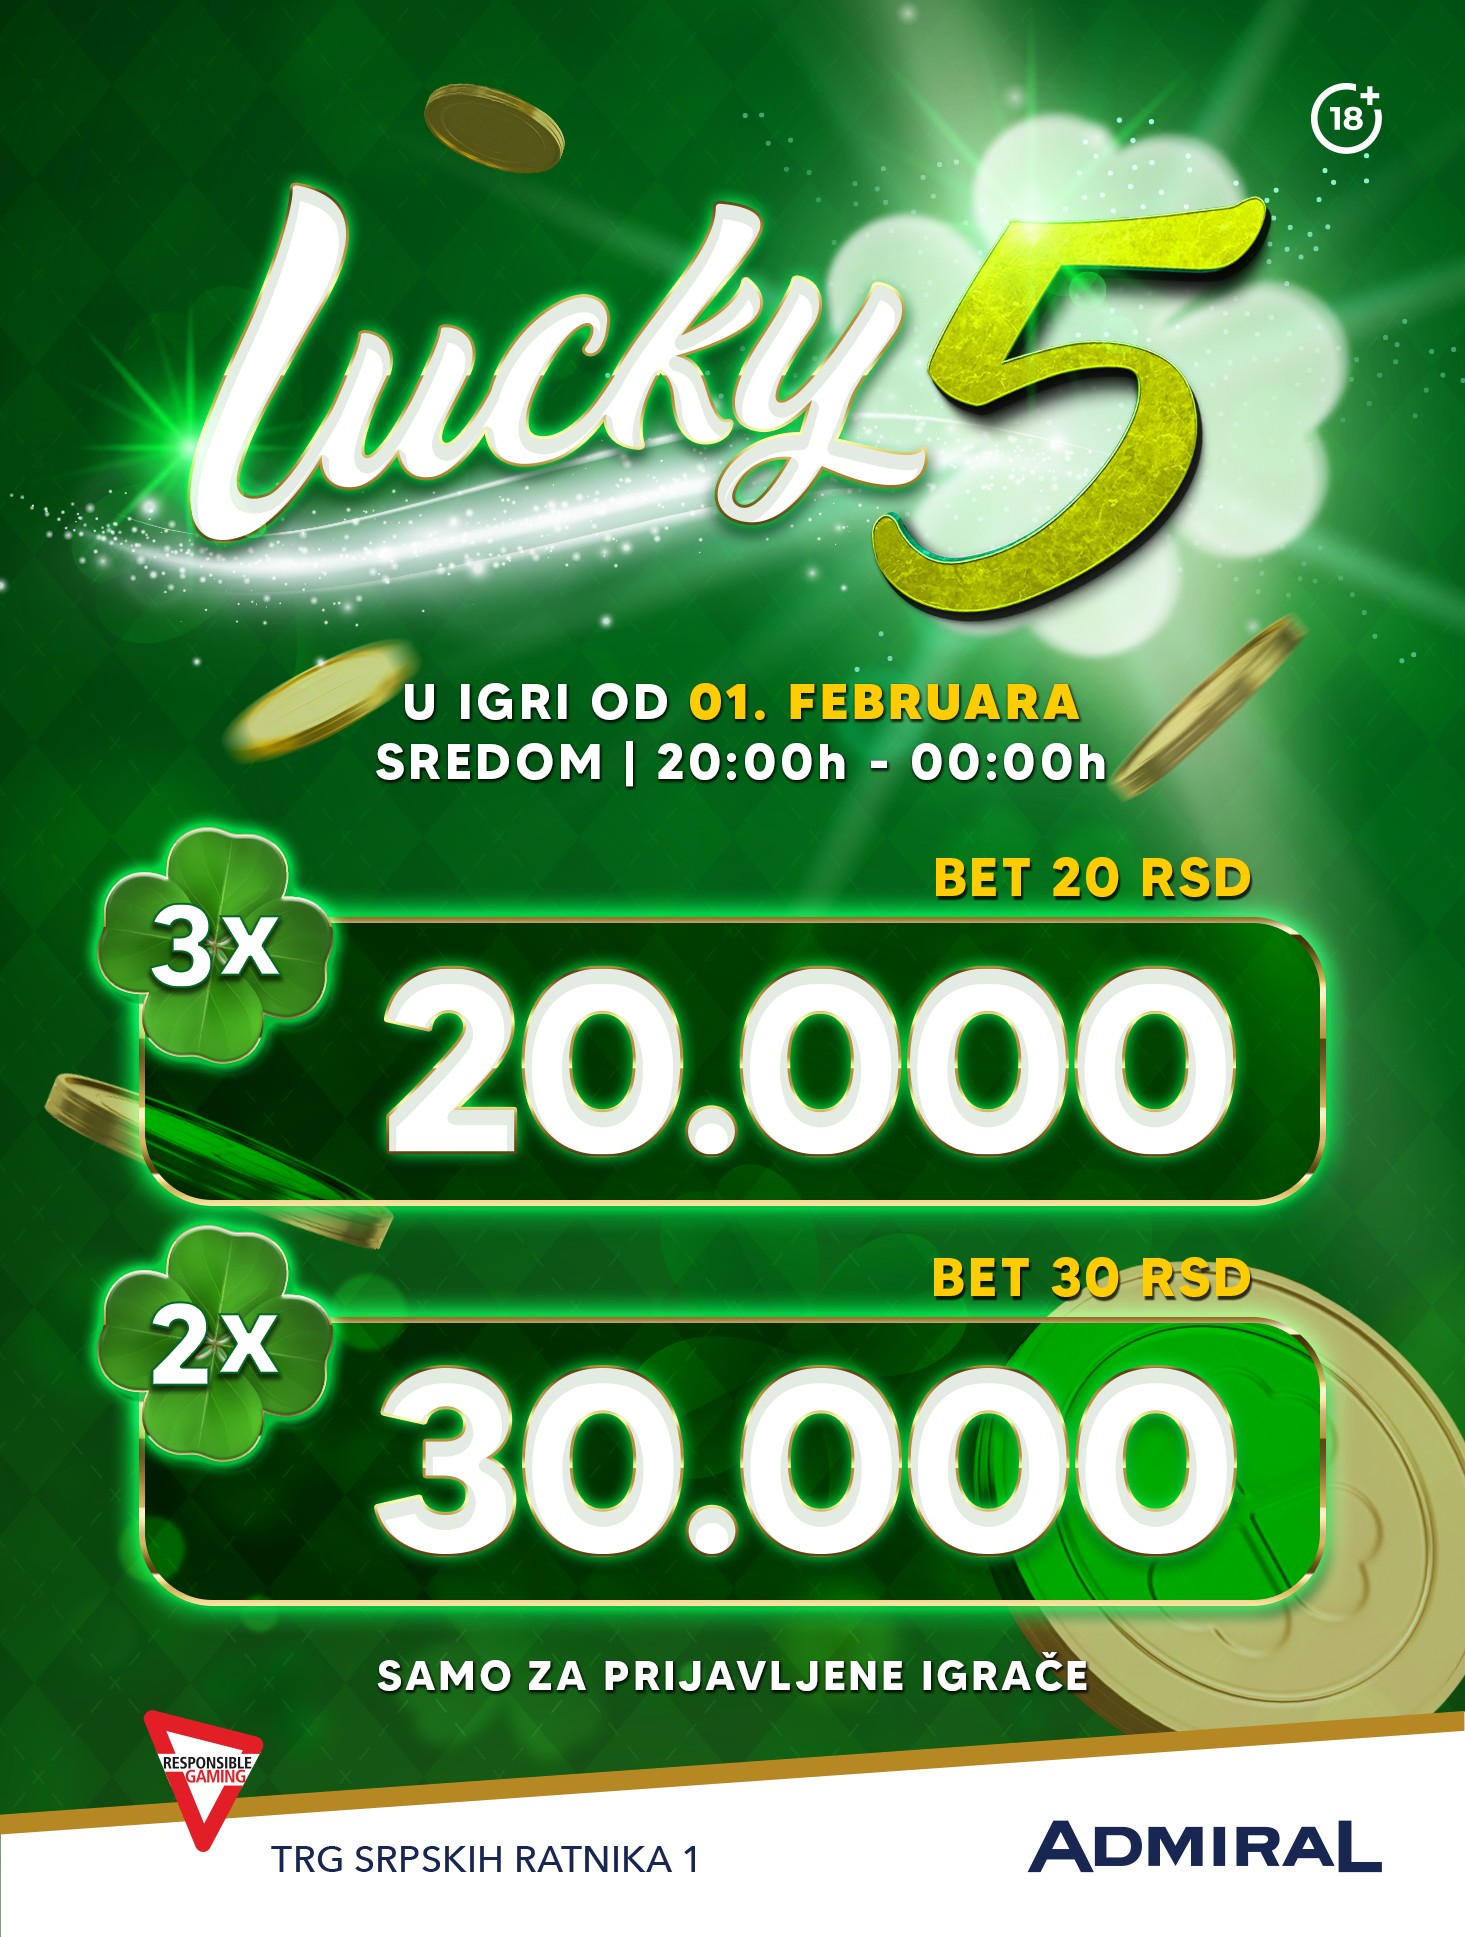 Lucky 5 – Kraljevo